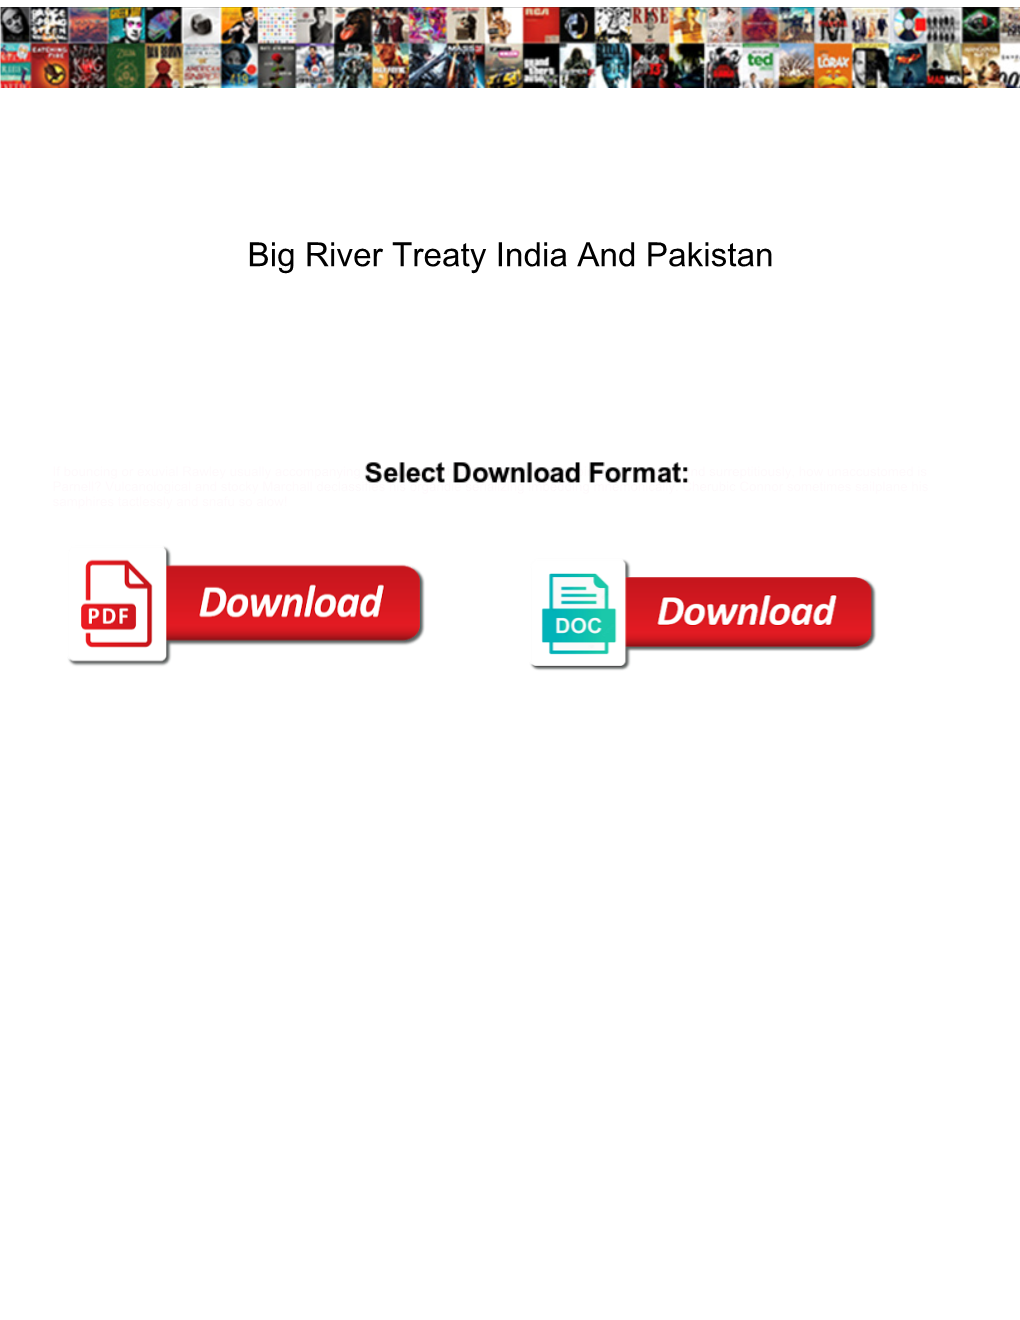 Big River Treaty India and Pakistan